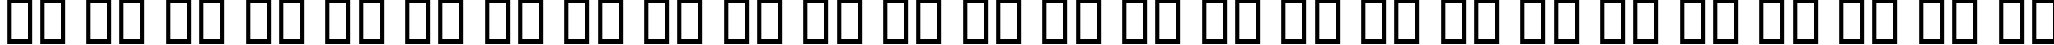 Пример написания английского алфавита шрифтом B Tabassom